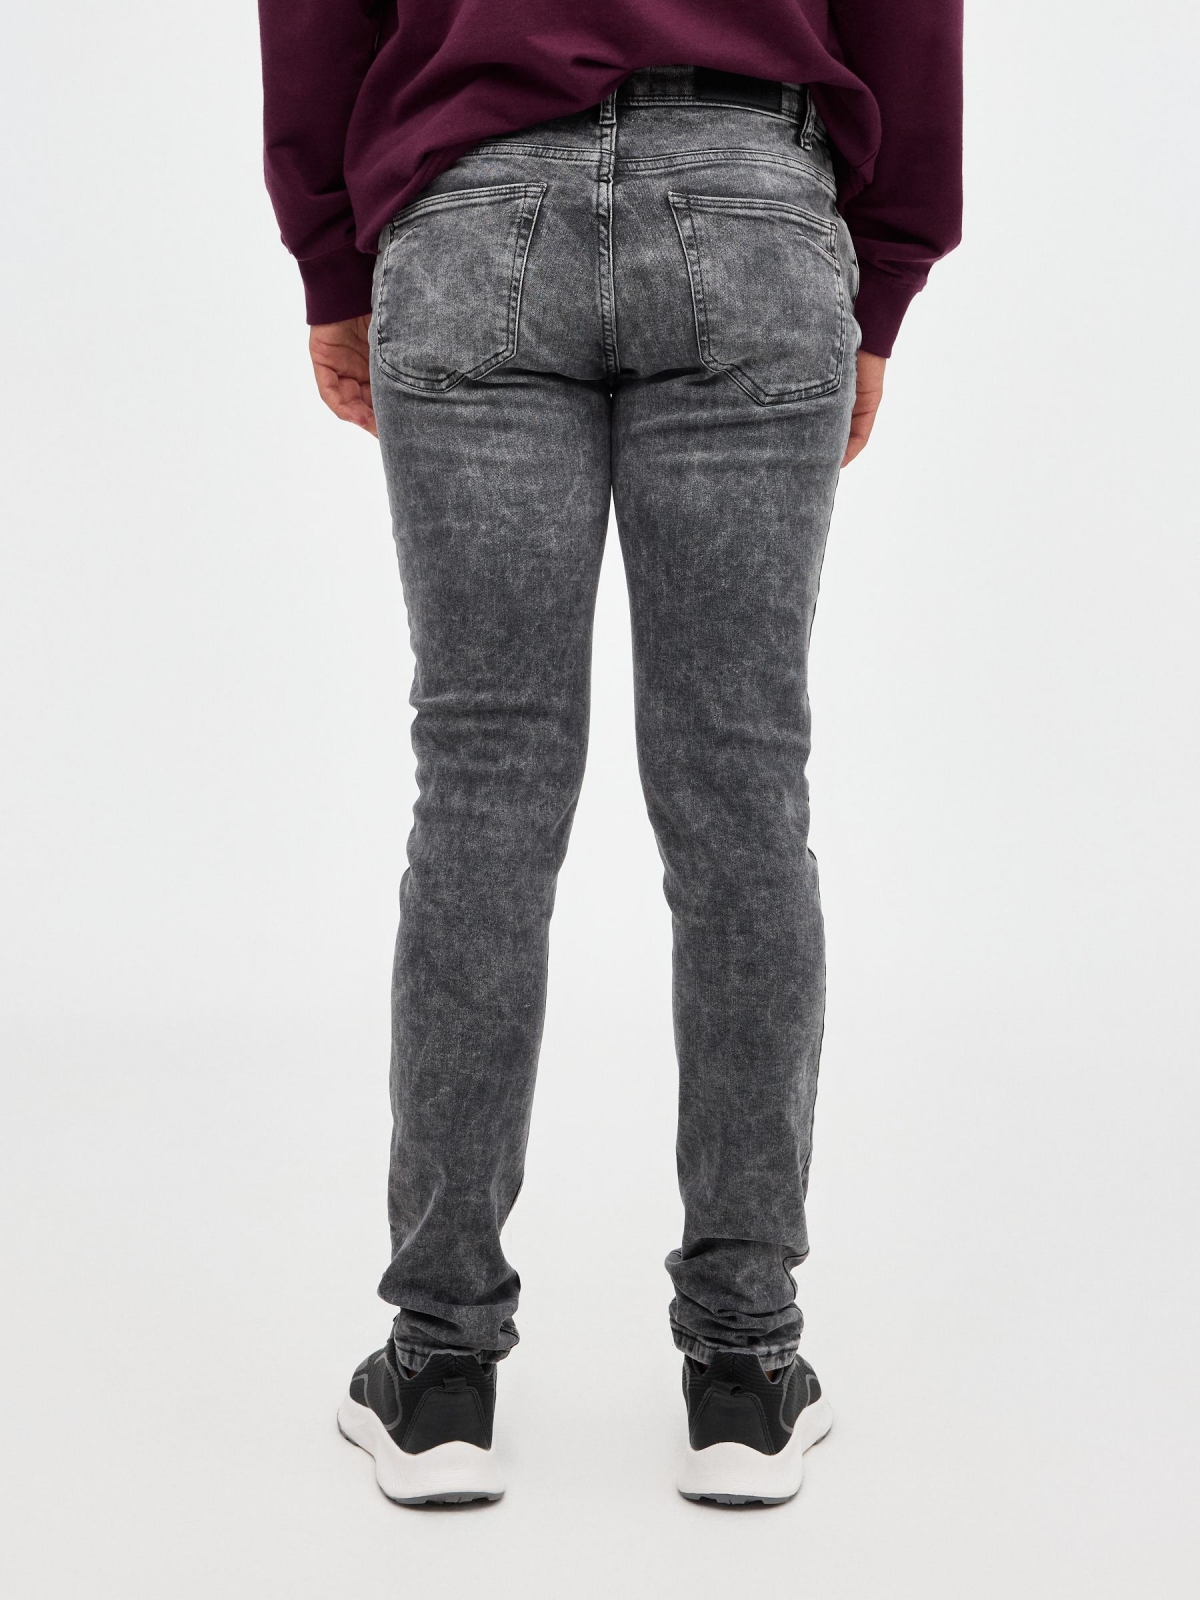 Jeans super slim rotos gris vista media trasera